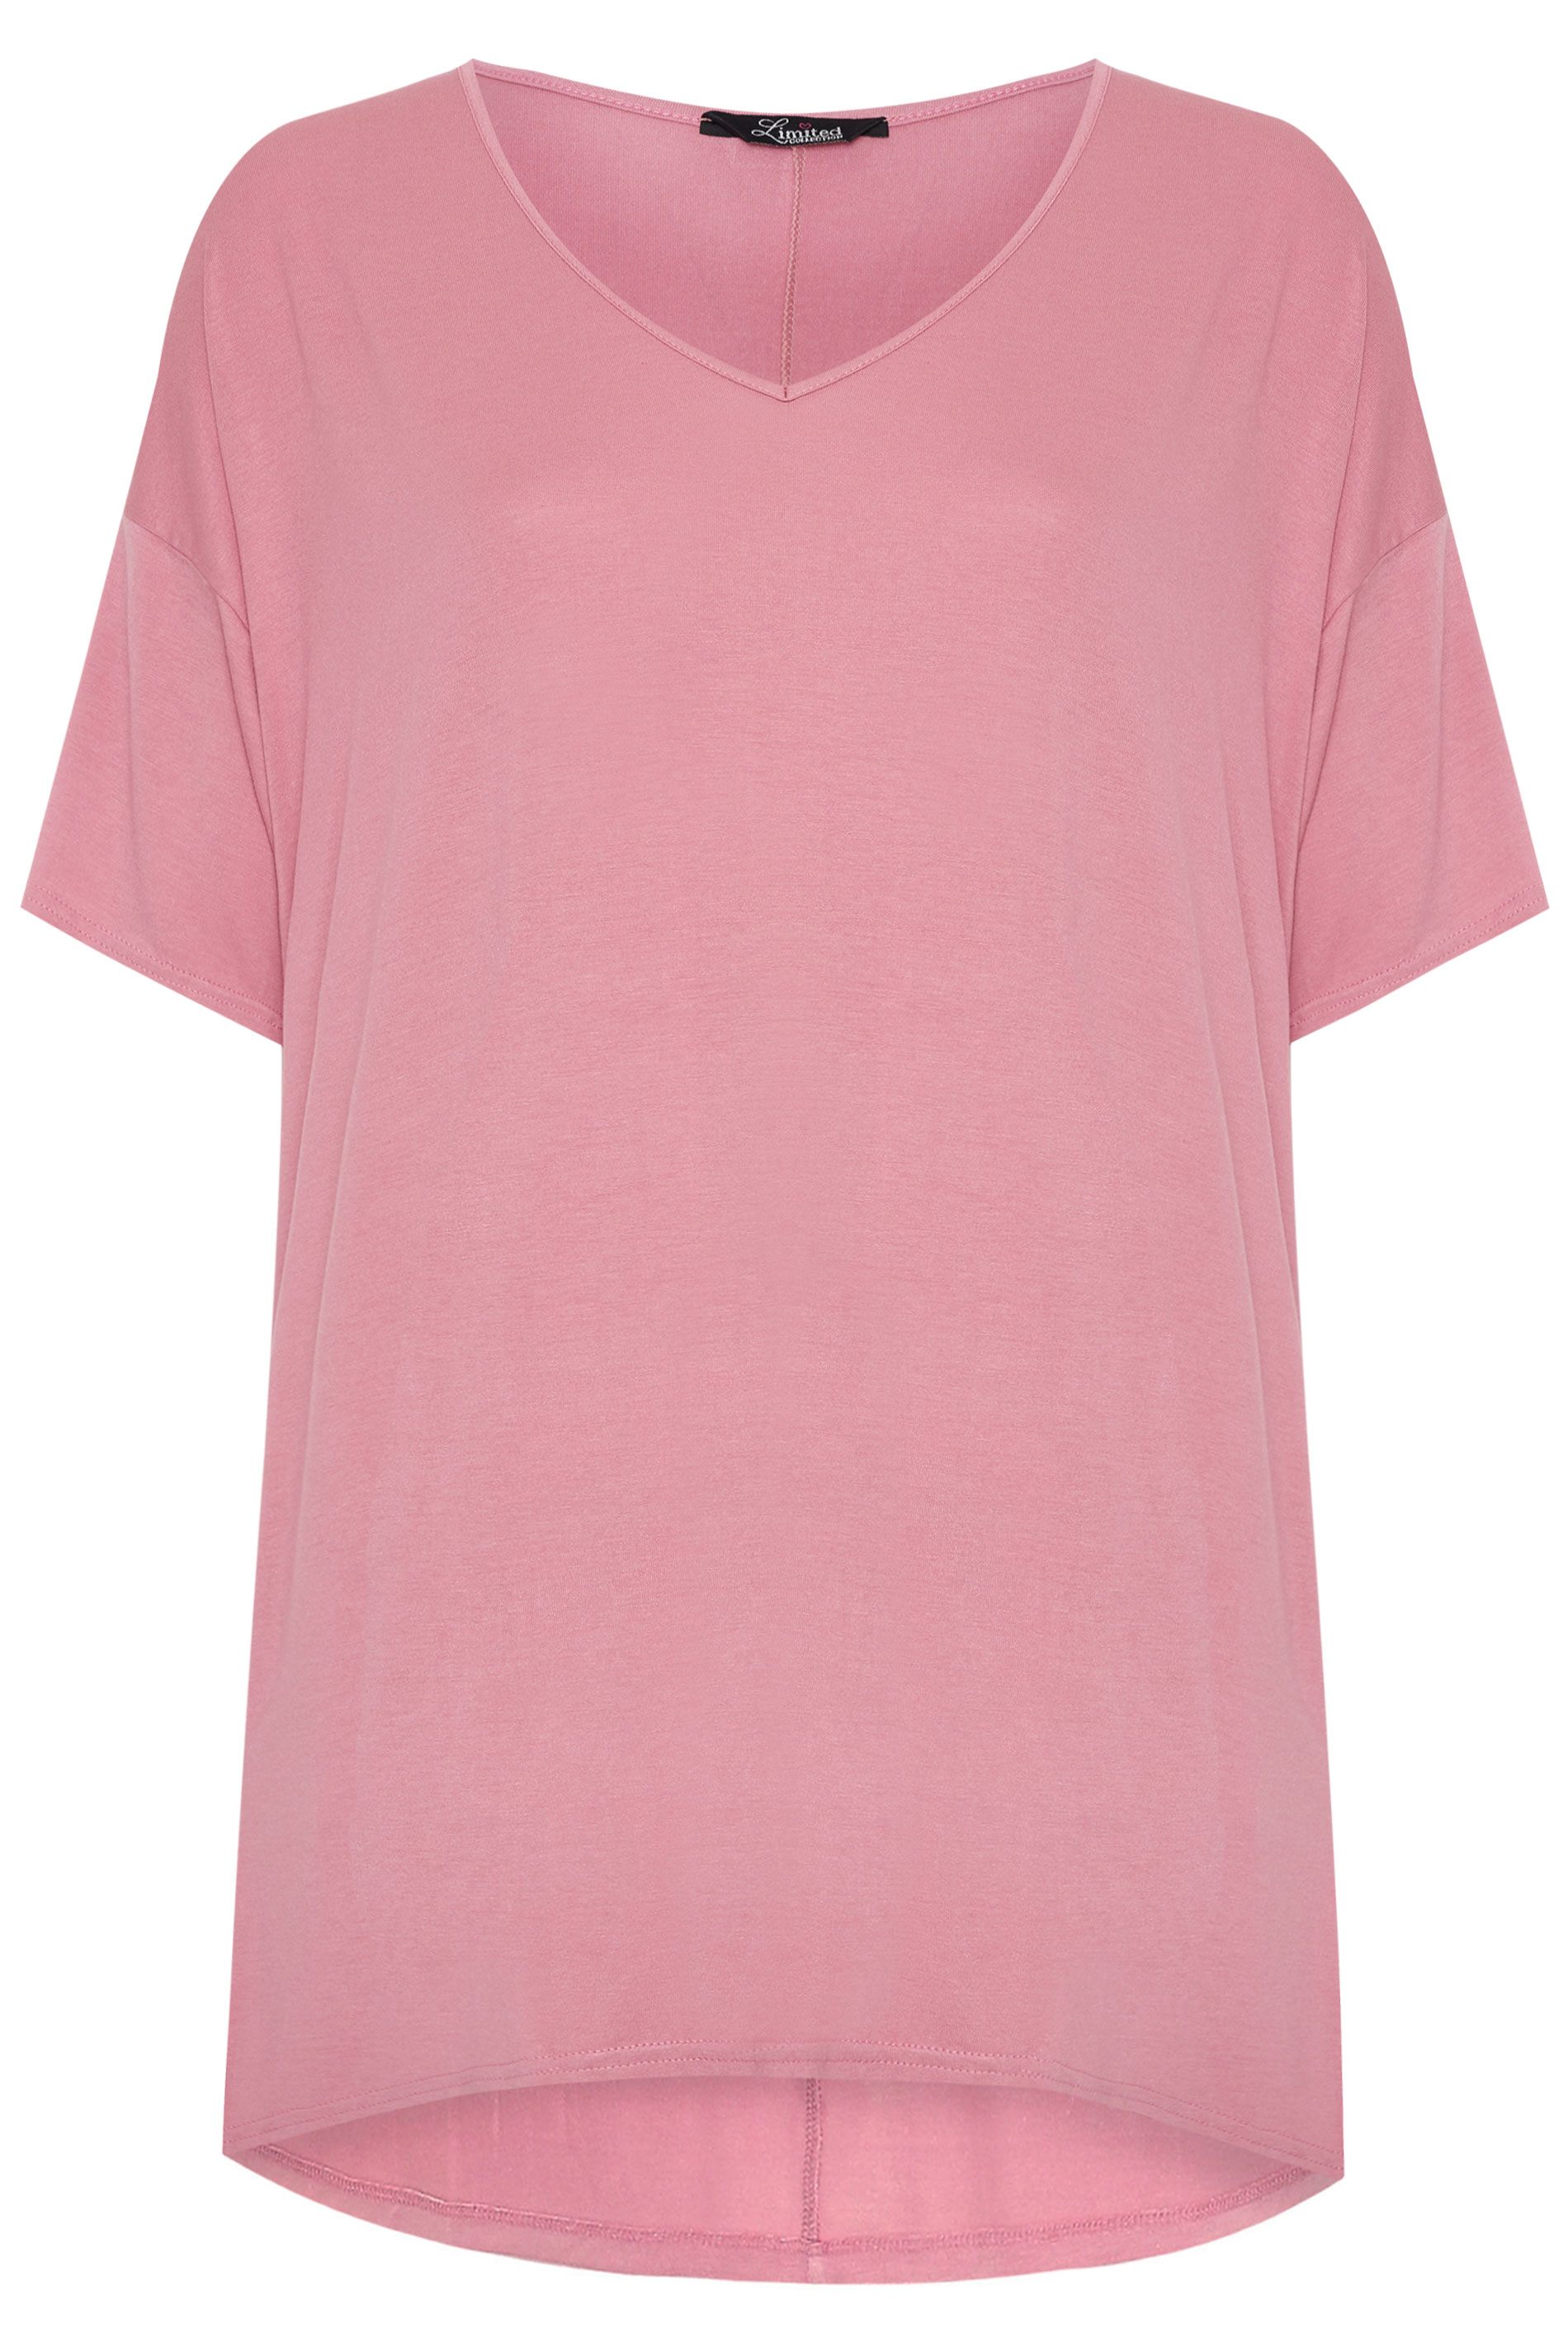 Blush Pink Dipped Hem Drop Shoulder T-Shirt | Yours Clothing